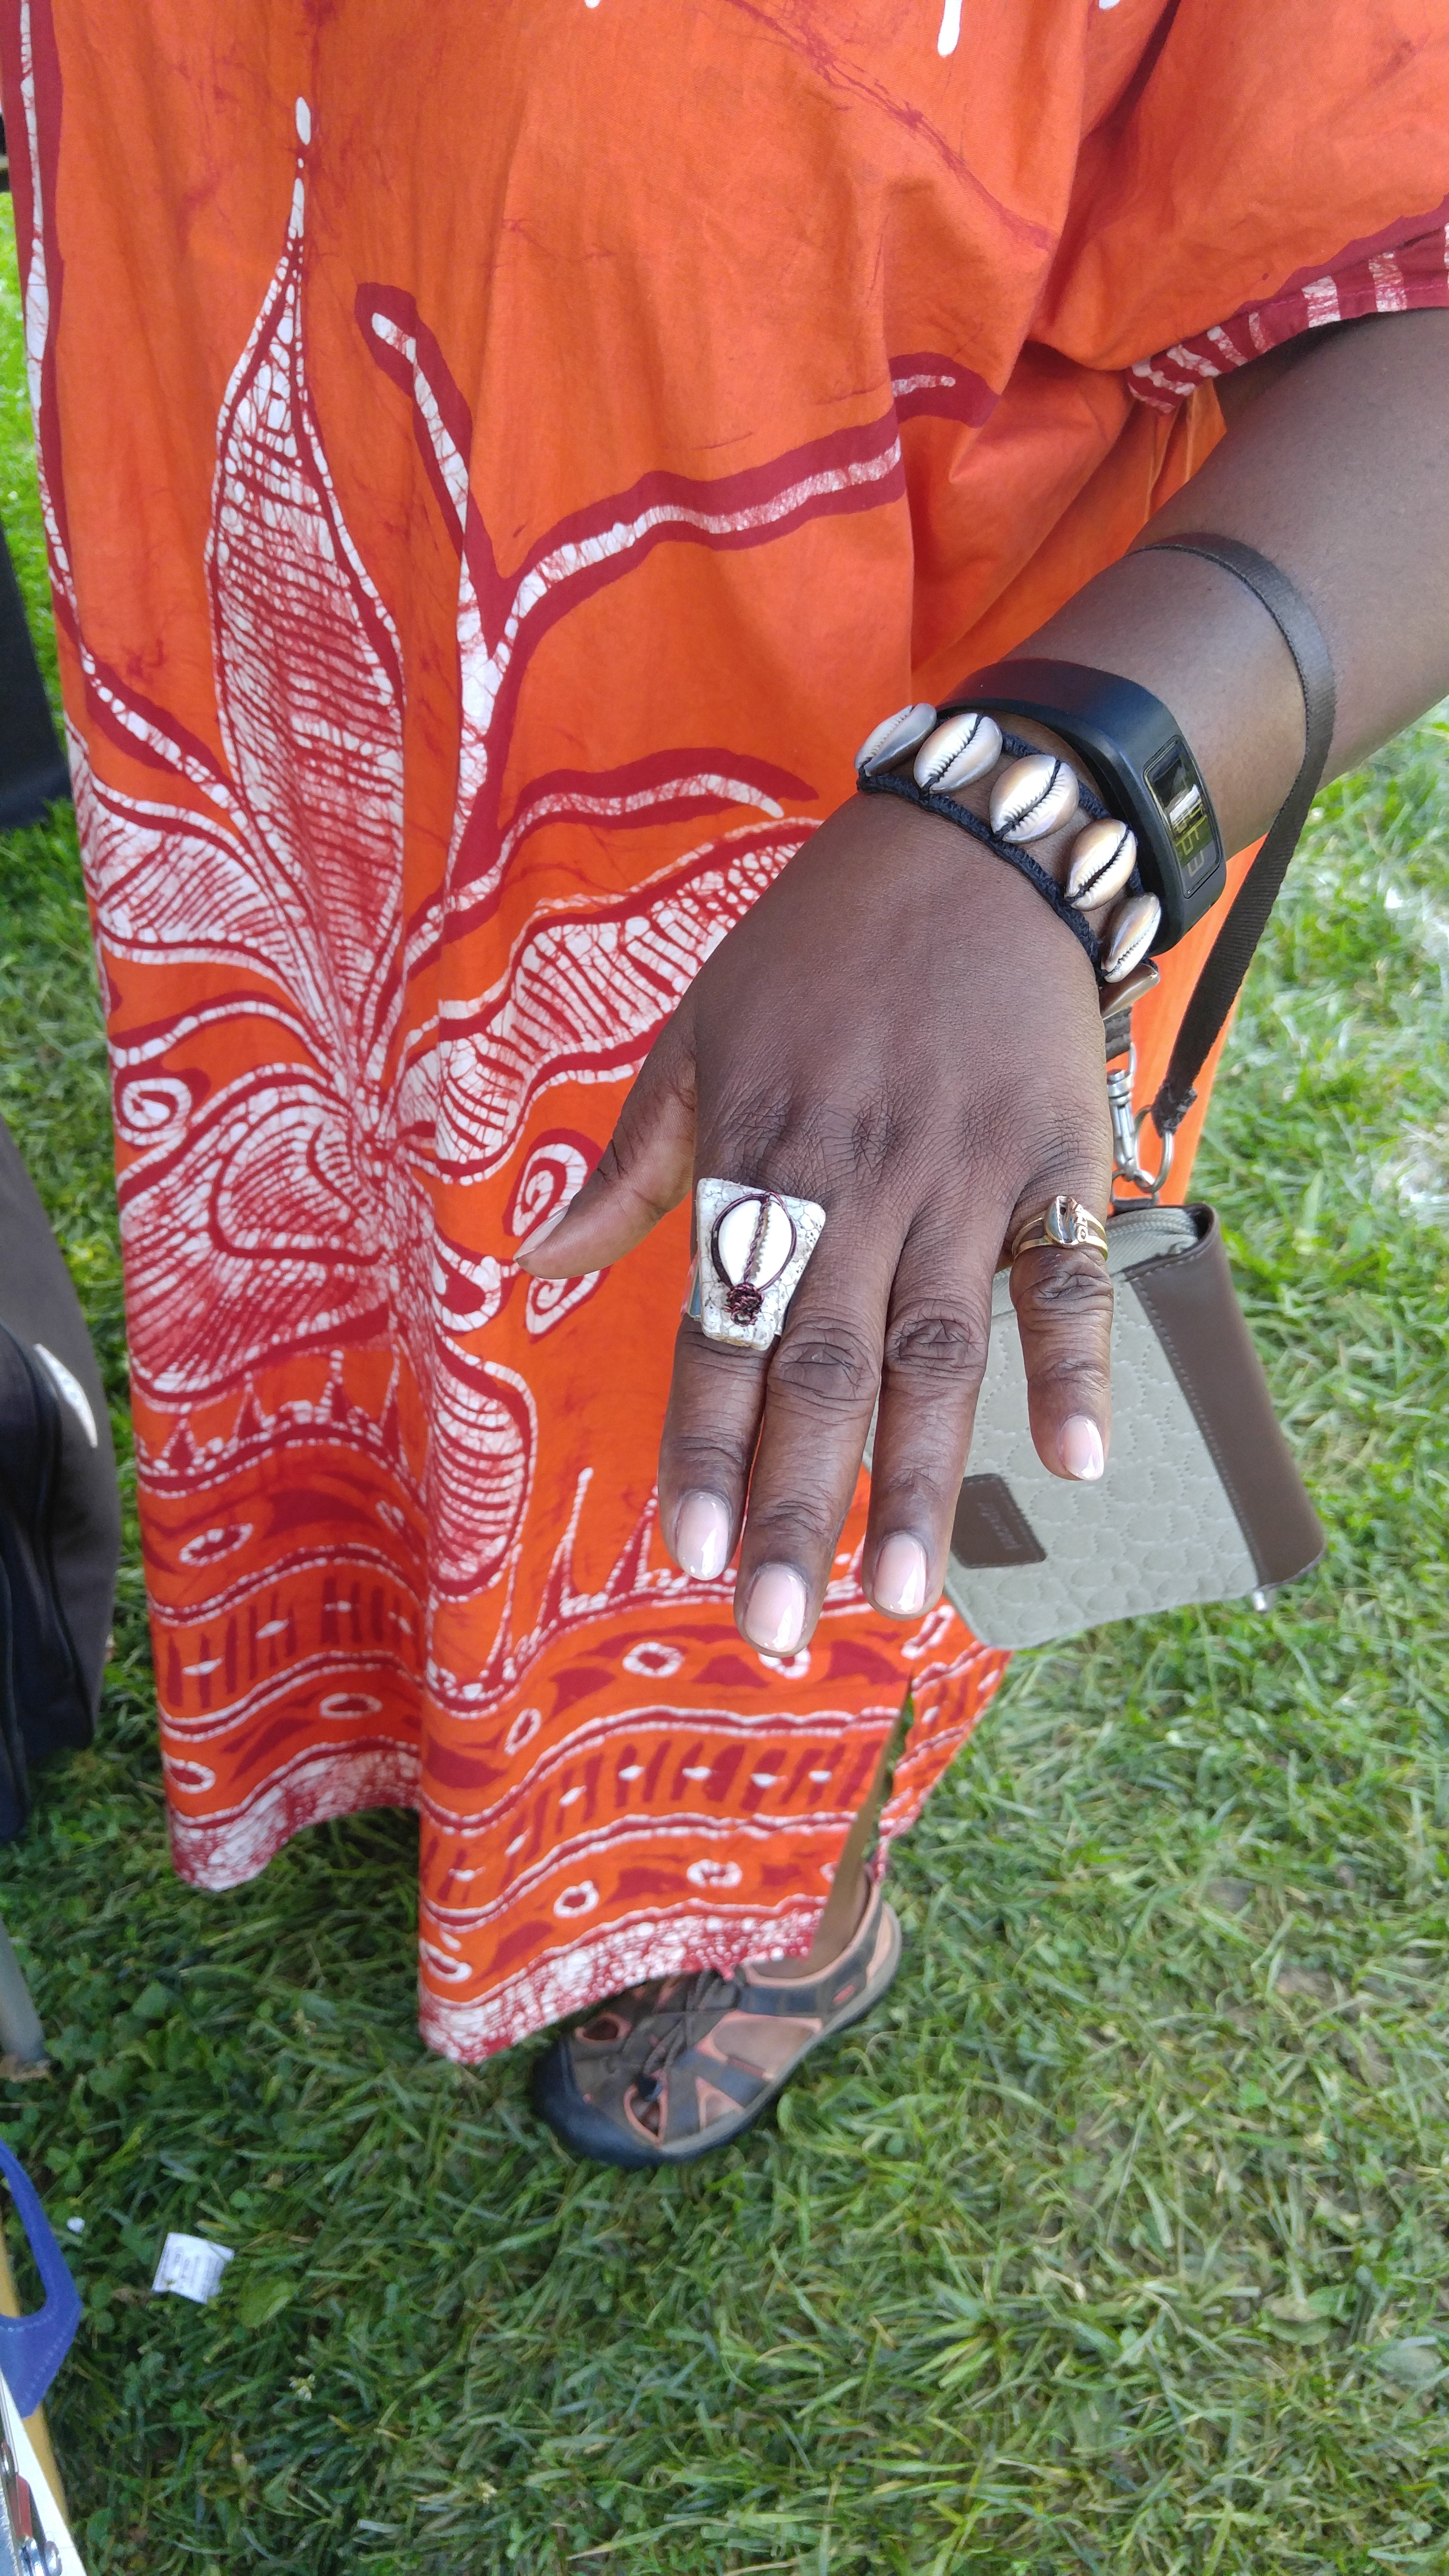 Customer wearing Nikus ring at Common Ground Festival 2016